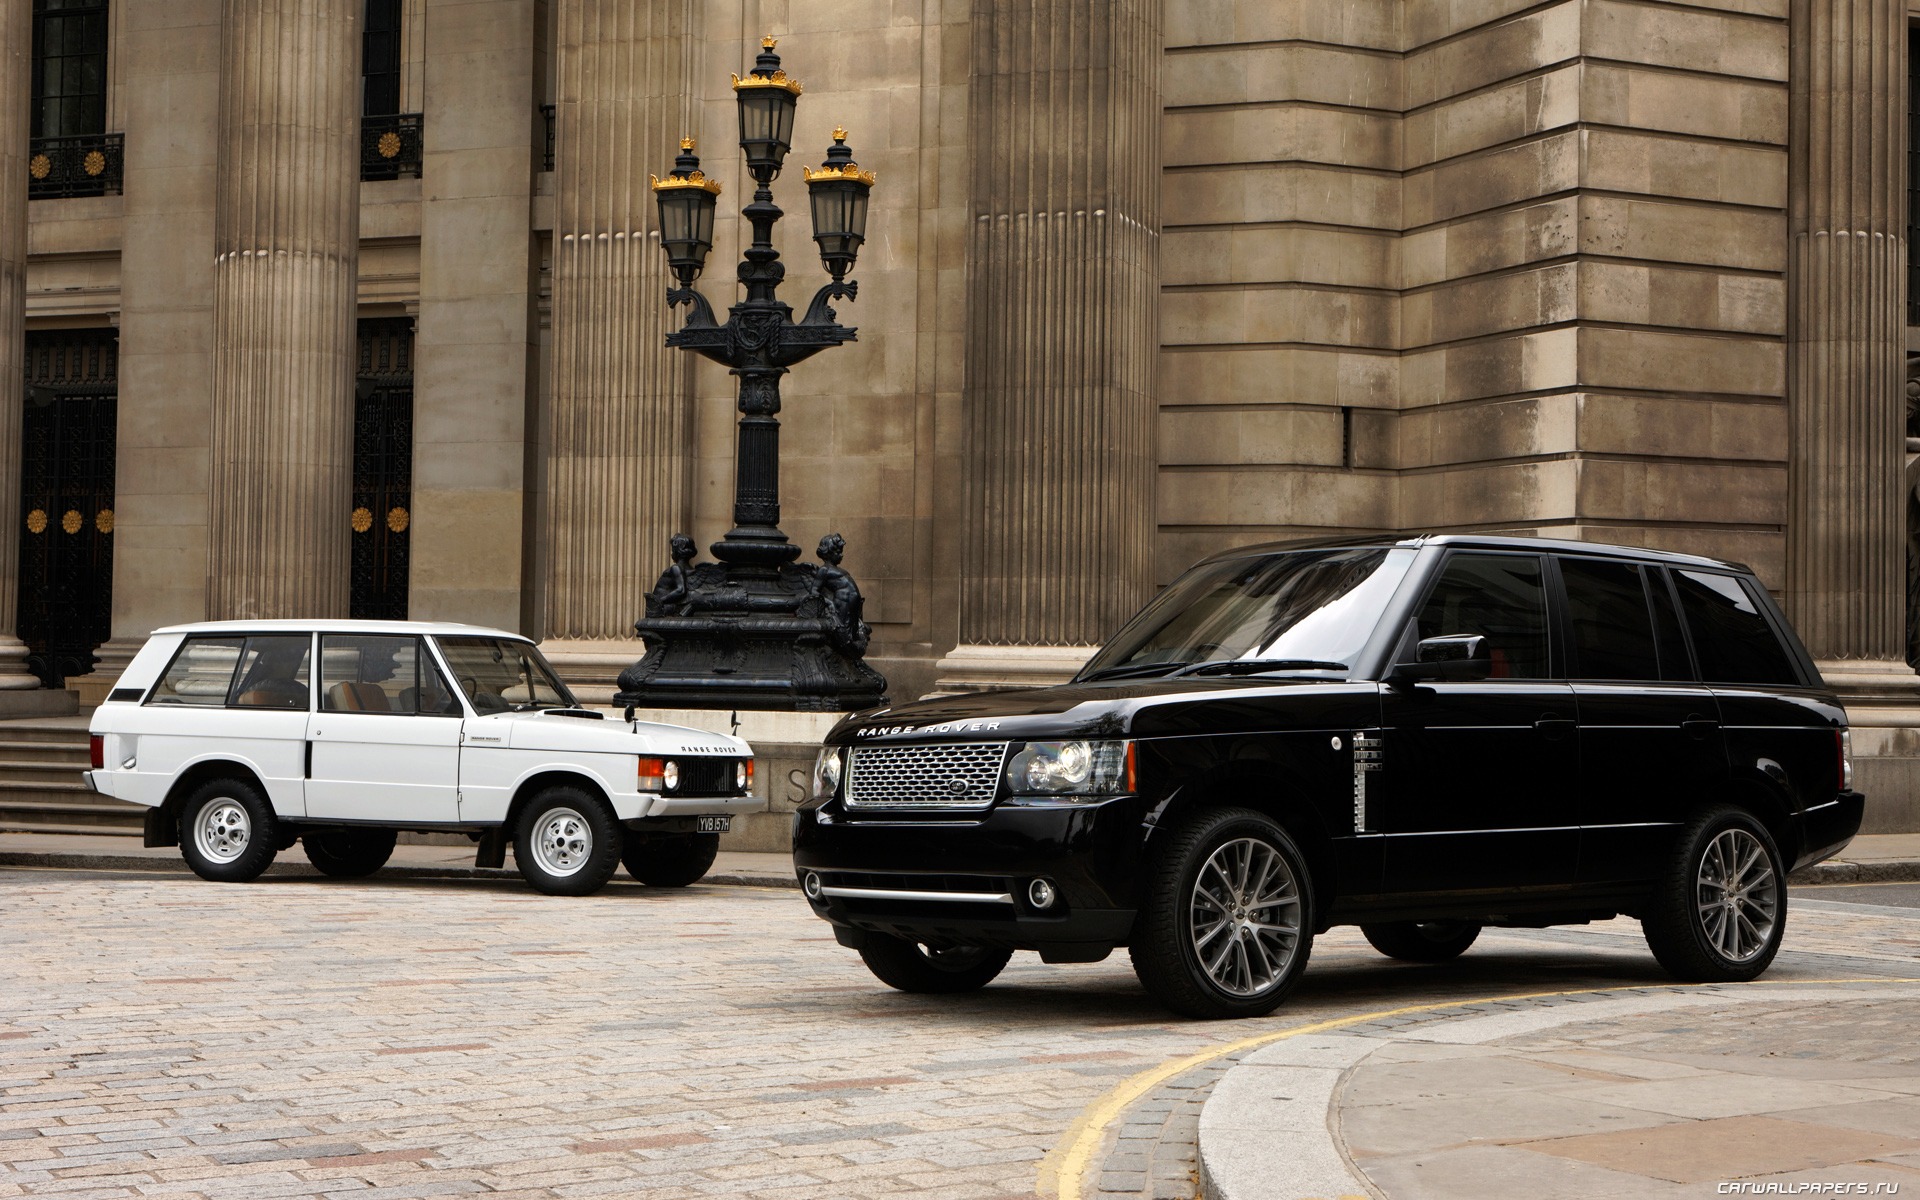 Land Rover Range Rover Black Edition - 2011 路虎10 - 1920x1200